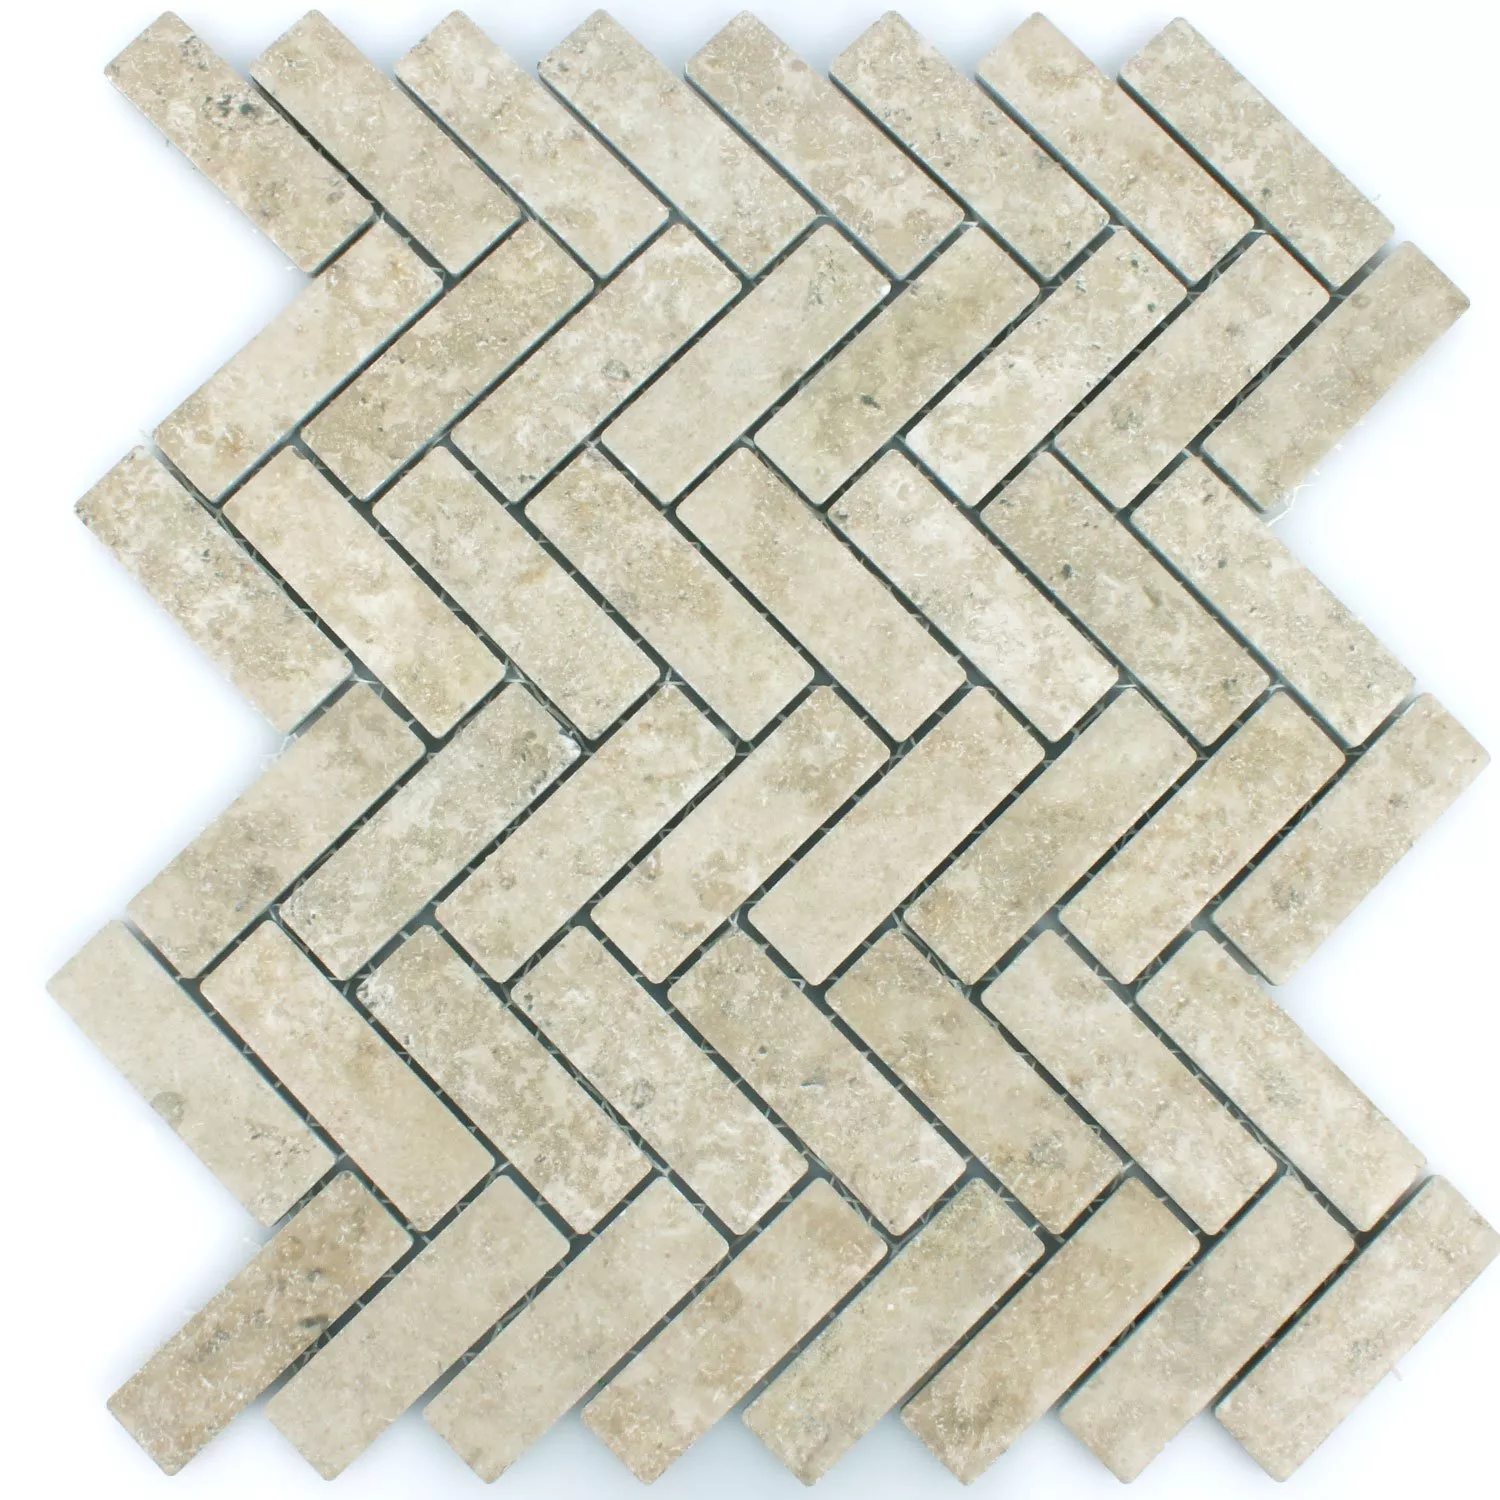 Sample Mosaic Tiles Ceramic Rotilia Stone Optic Beige